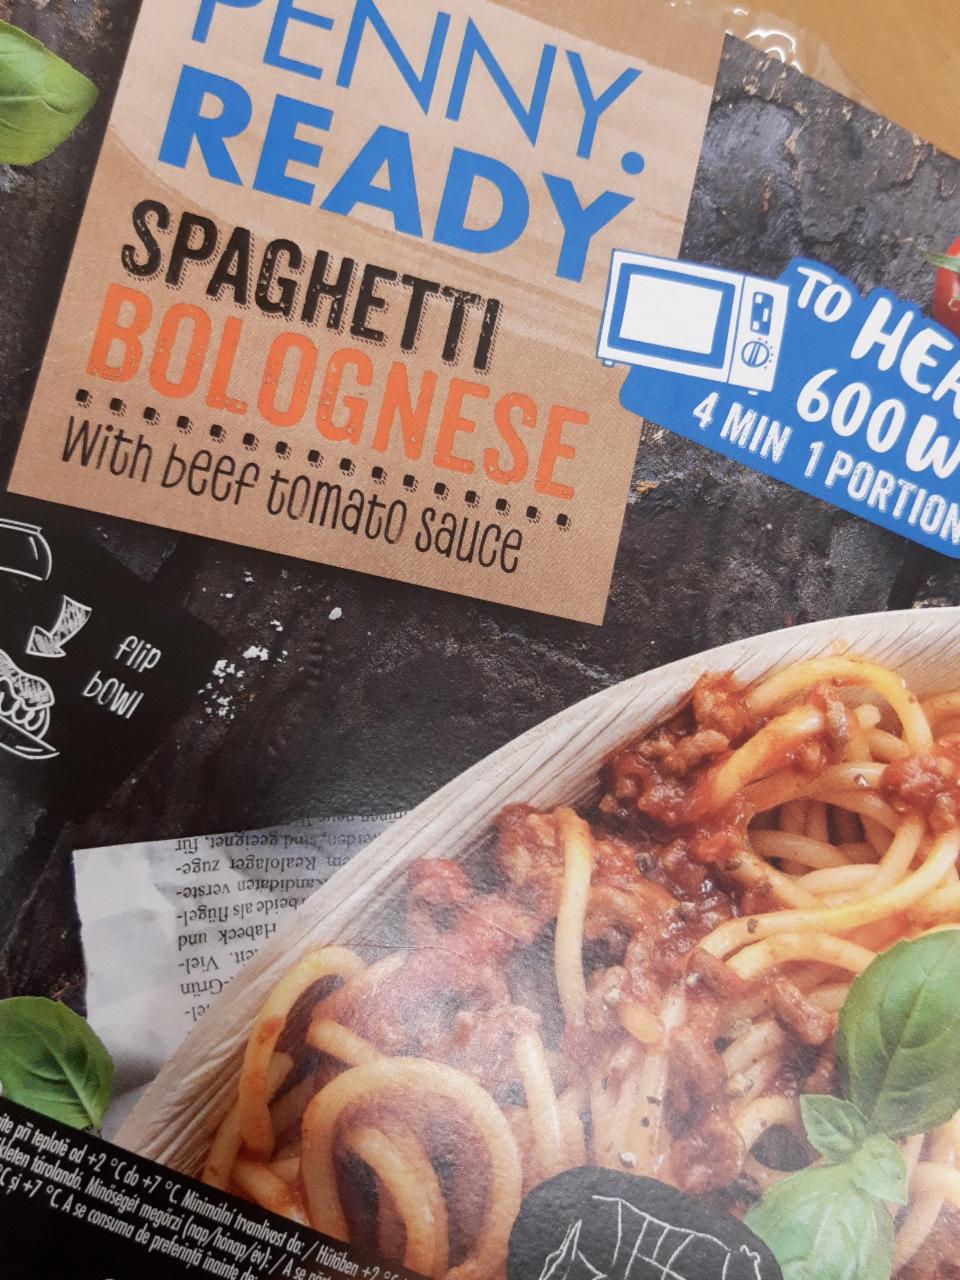 Fotografie - Spaghetti Bolognese Penny ready